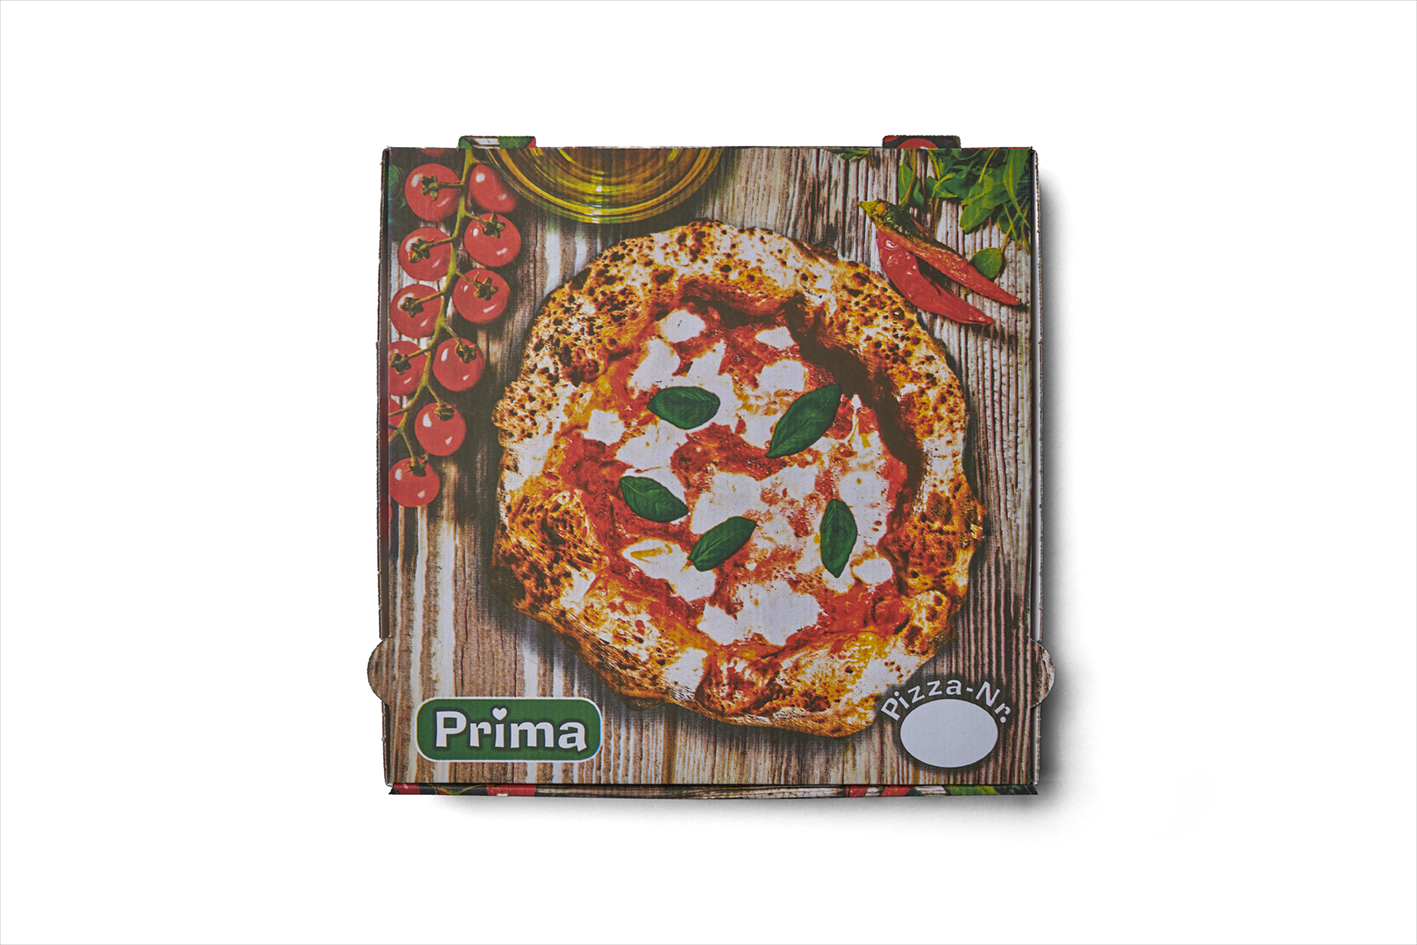 Pizzakarton "Prima"